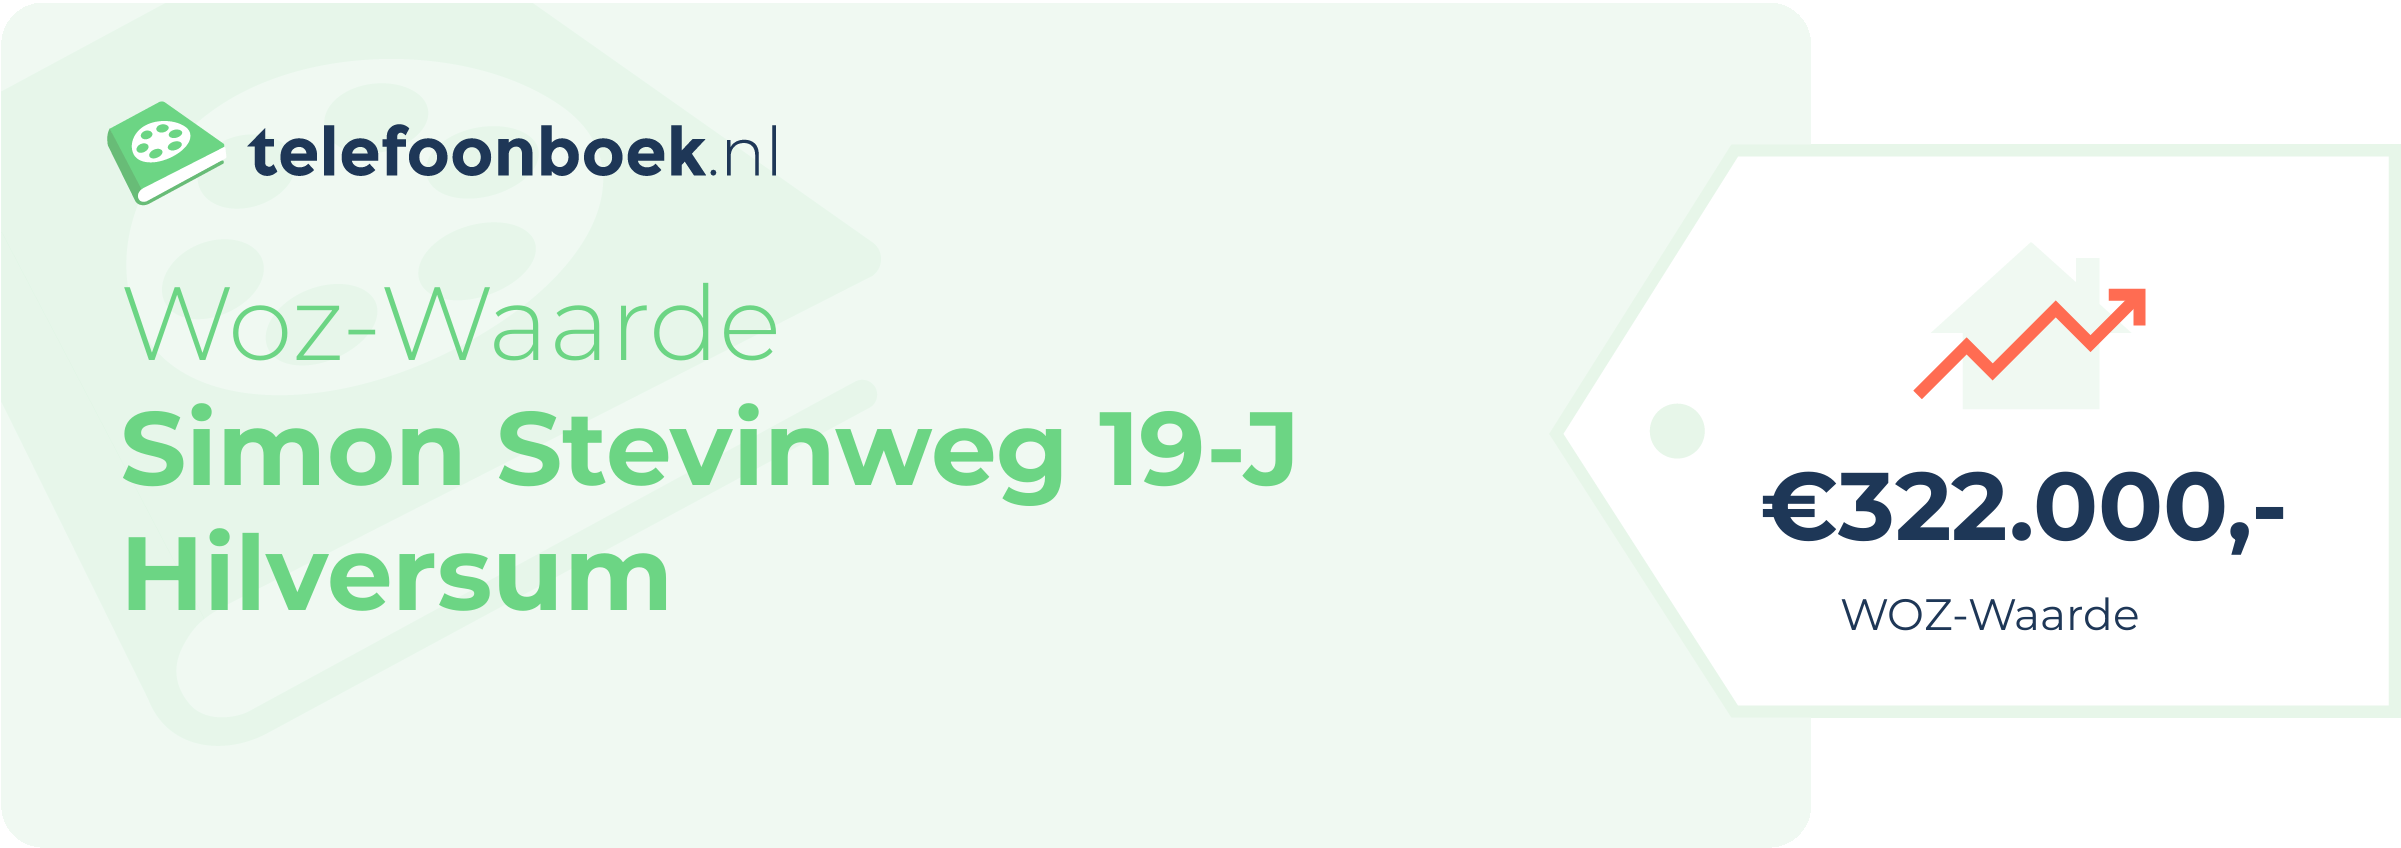 WOZ-waarde Simon Stevinweg 19-J Hilversum